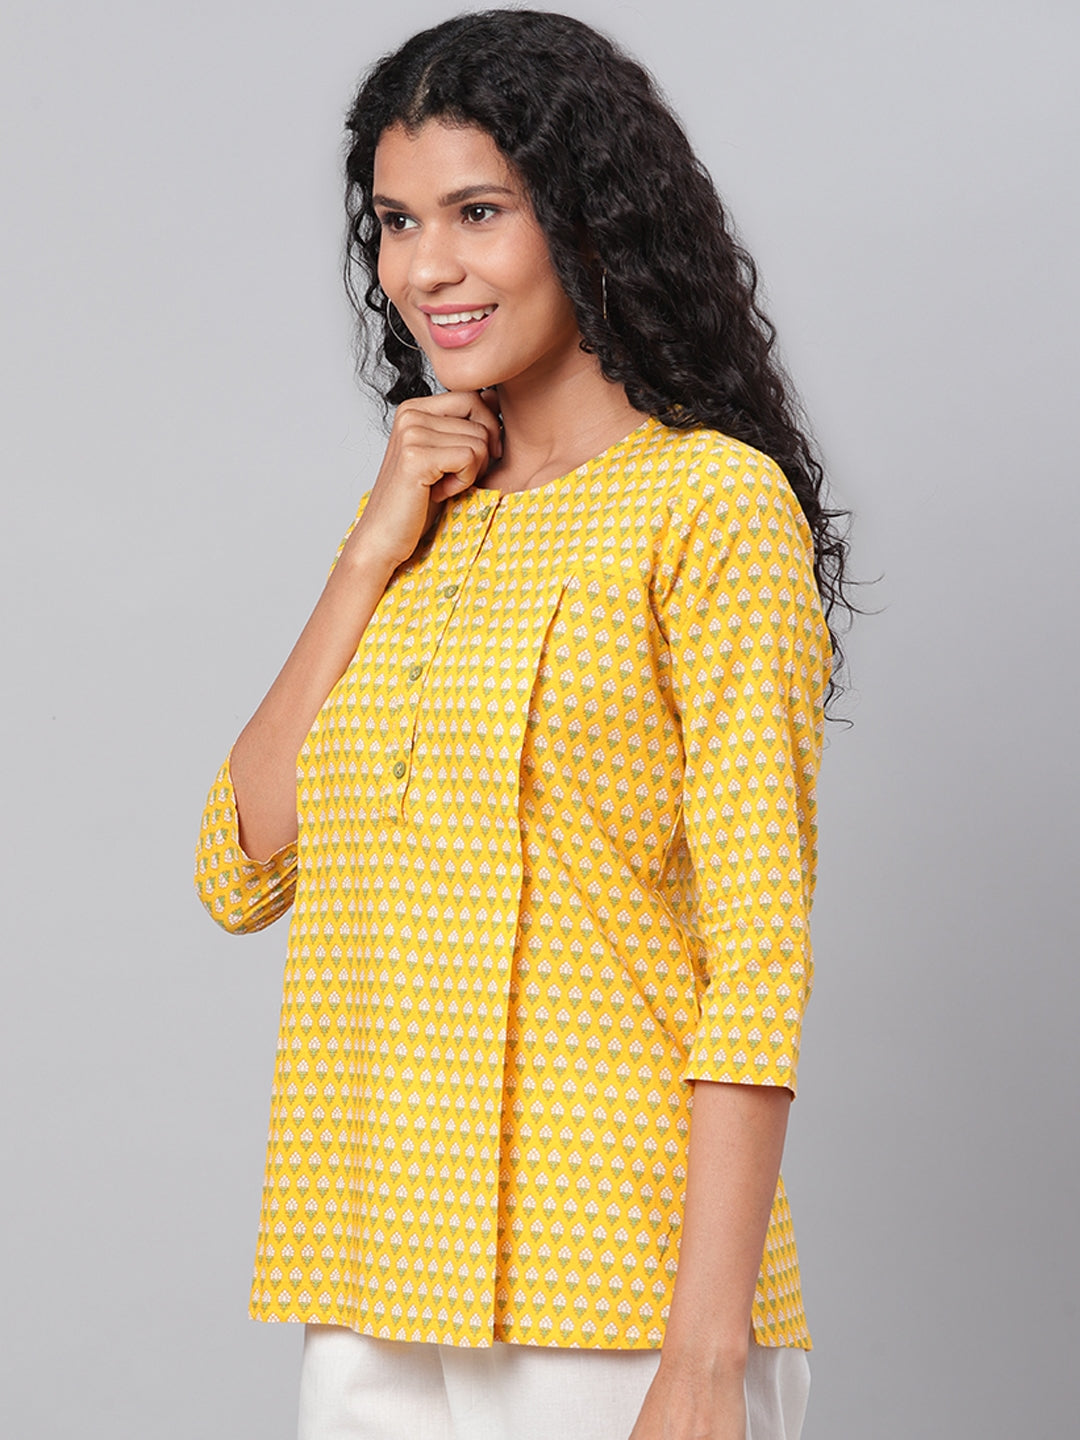 Myshka Women's Yellow Printed 3/4 Sleeve Cotton Round Neck Casual Top